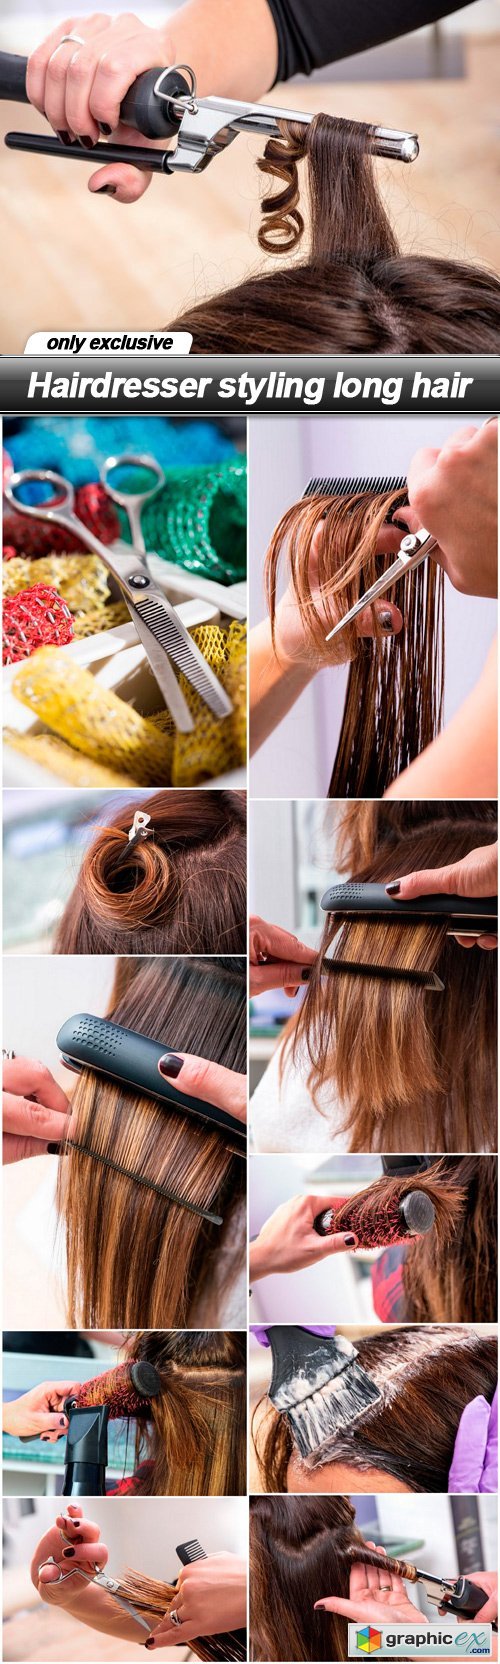 Hairdresser styling long hair - 11 UHQ JPEG